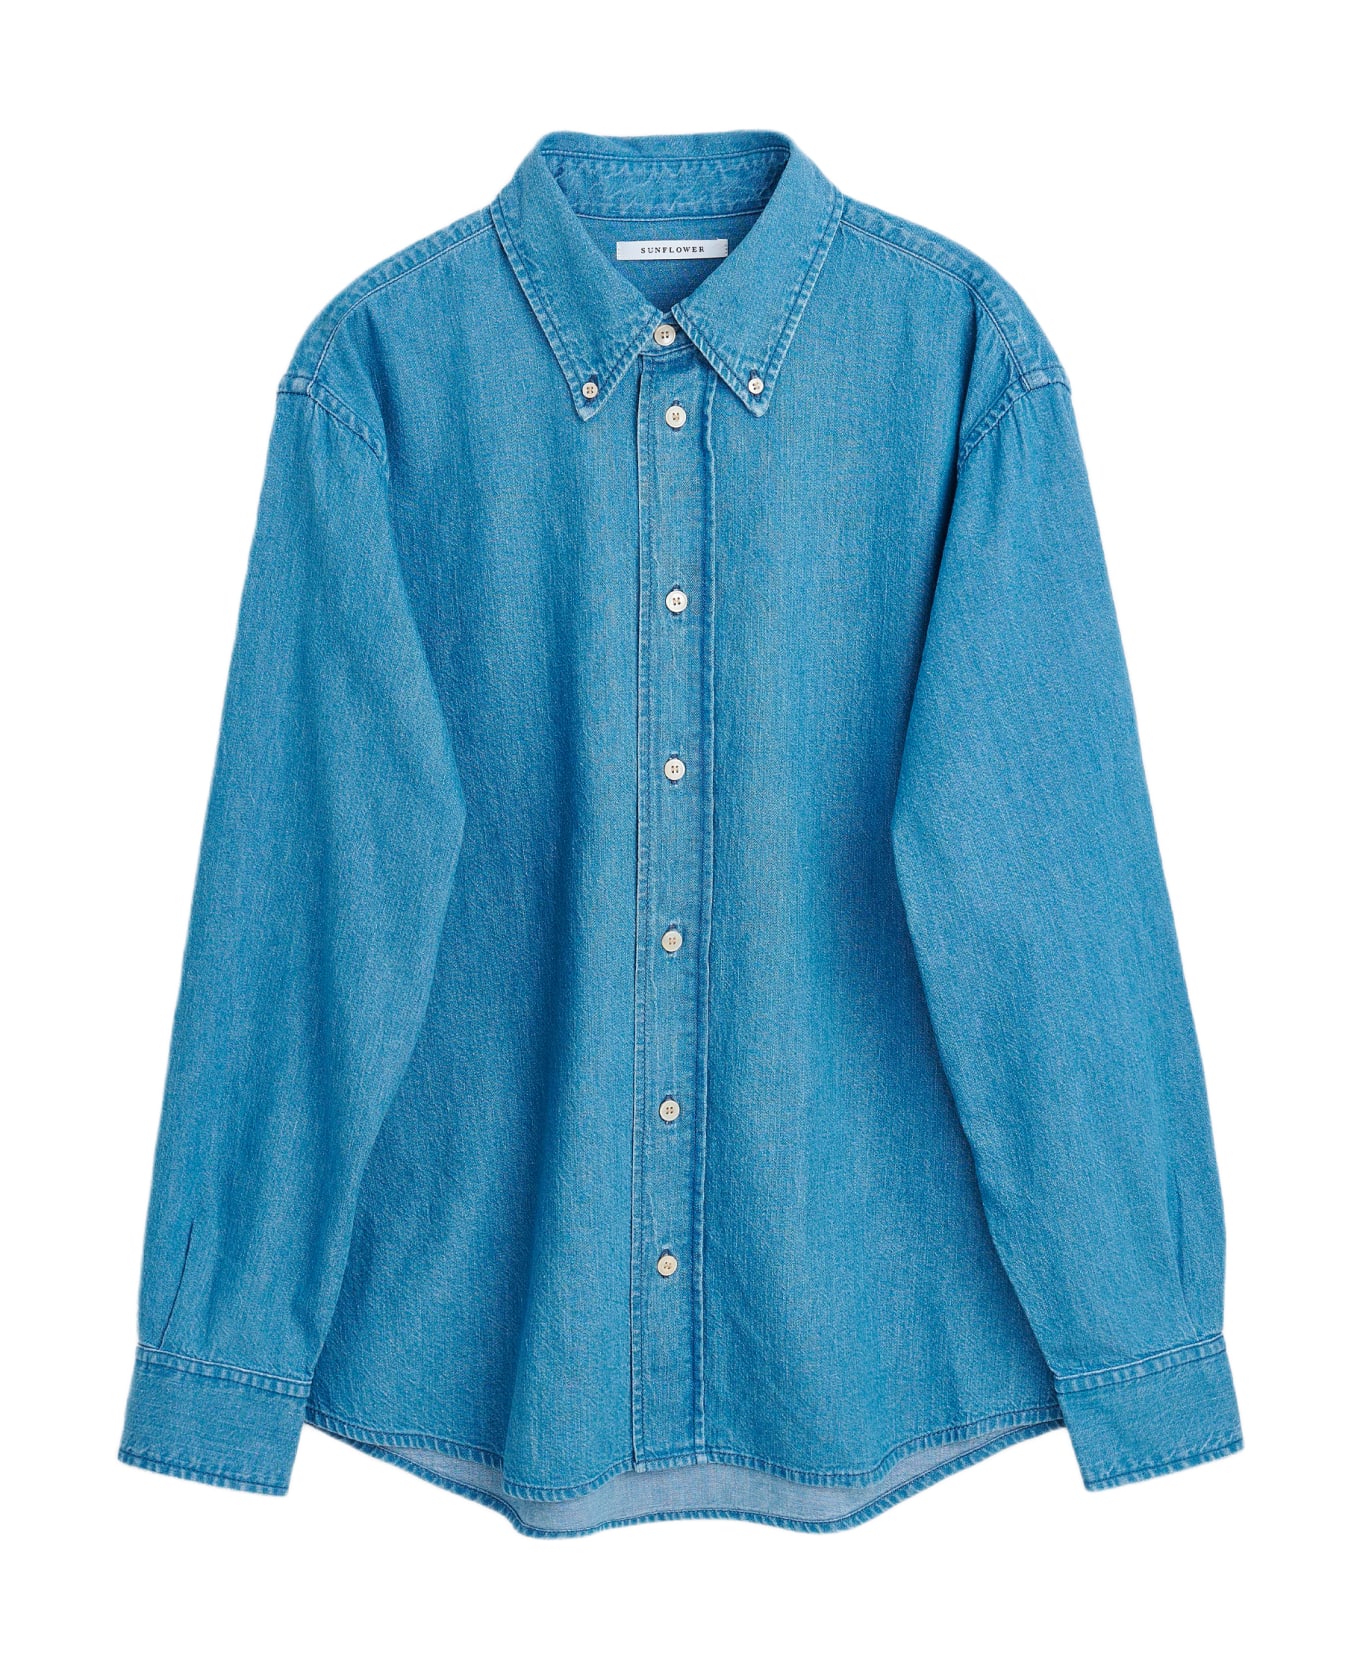 Sunflower #1189 Mid blue chambray denim shirt with long sleeves - Denim Button Down Shirt - Denim blu シャツ